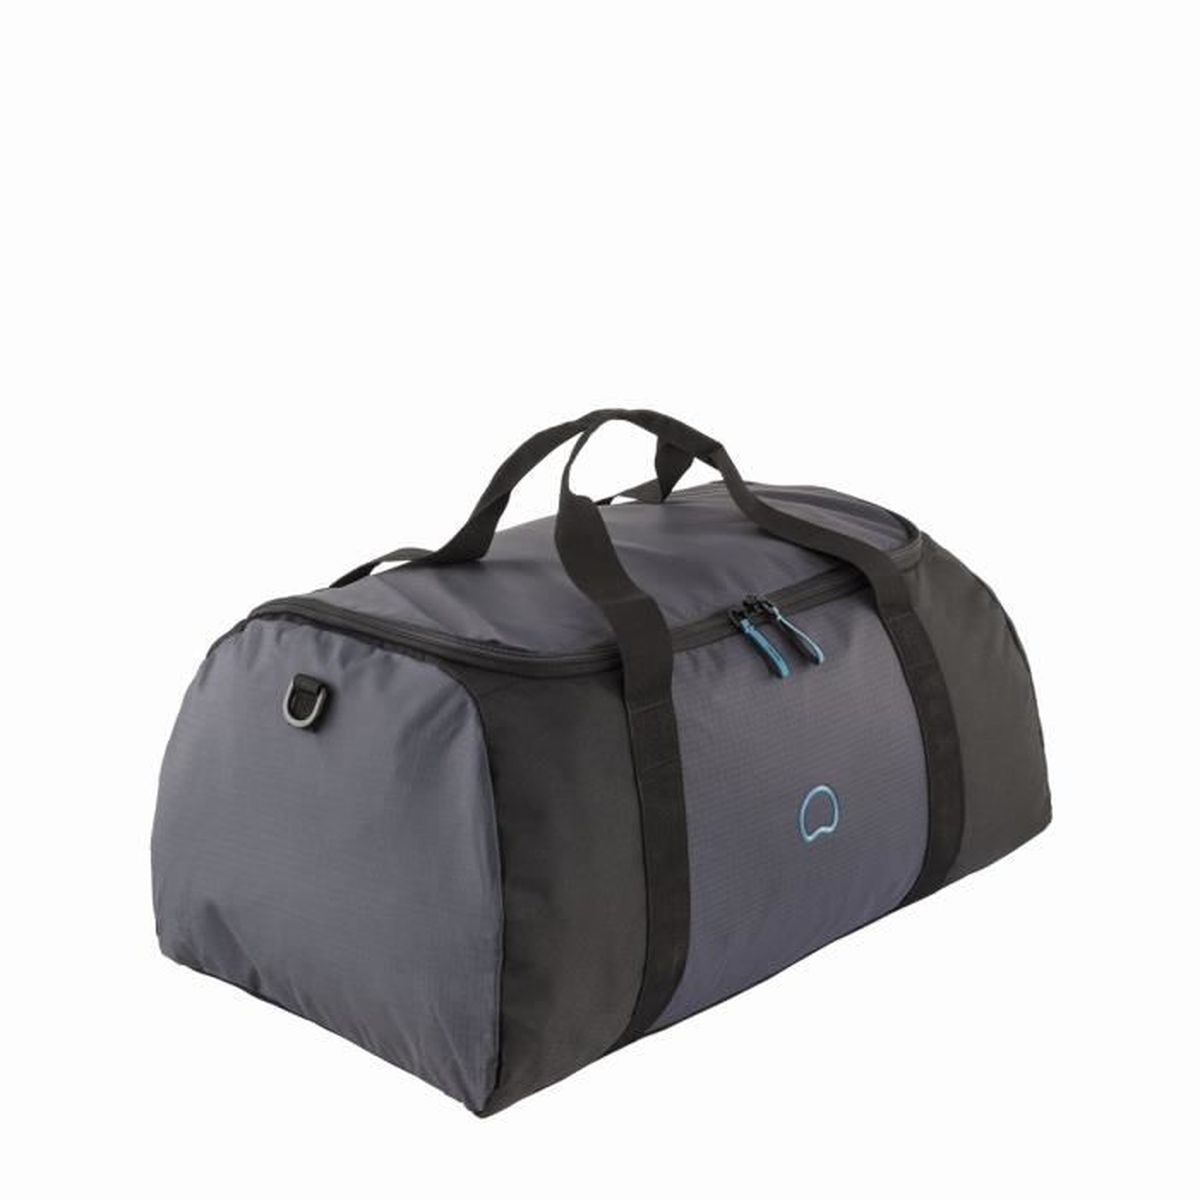 Delsey Vincennes 79cm Foldable Duffle Bag - Black